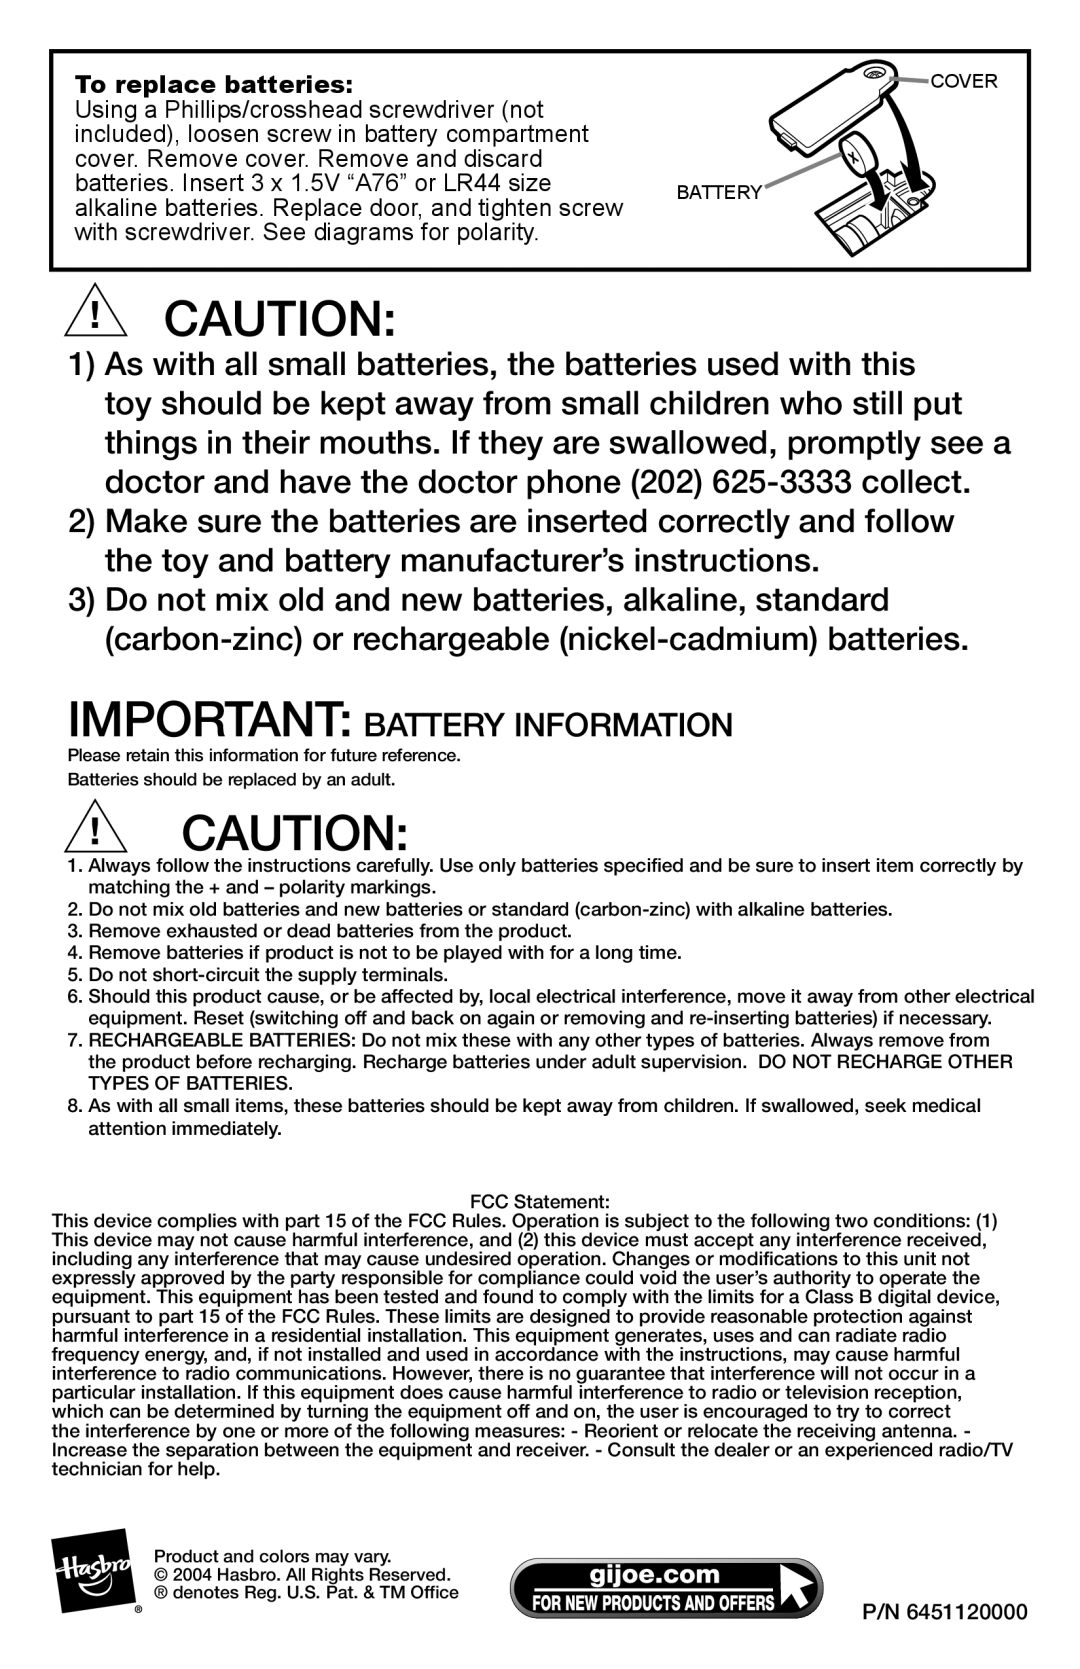 Hasbro 60917, 60116 manual Important Battery Information 